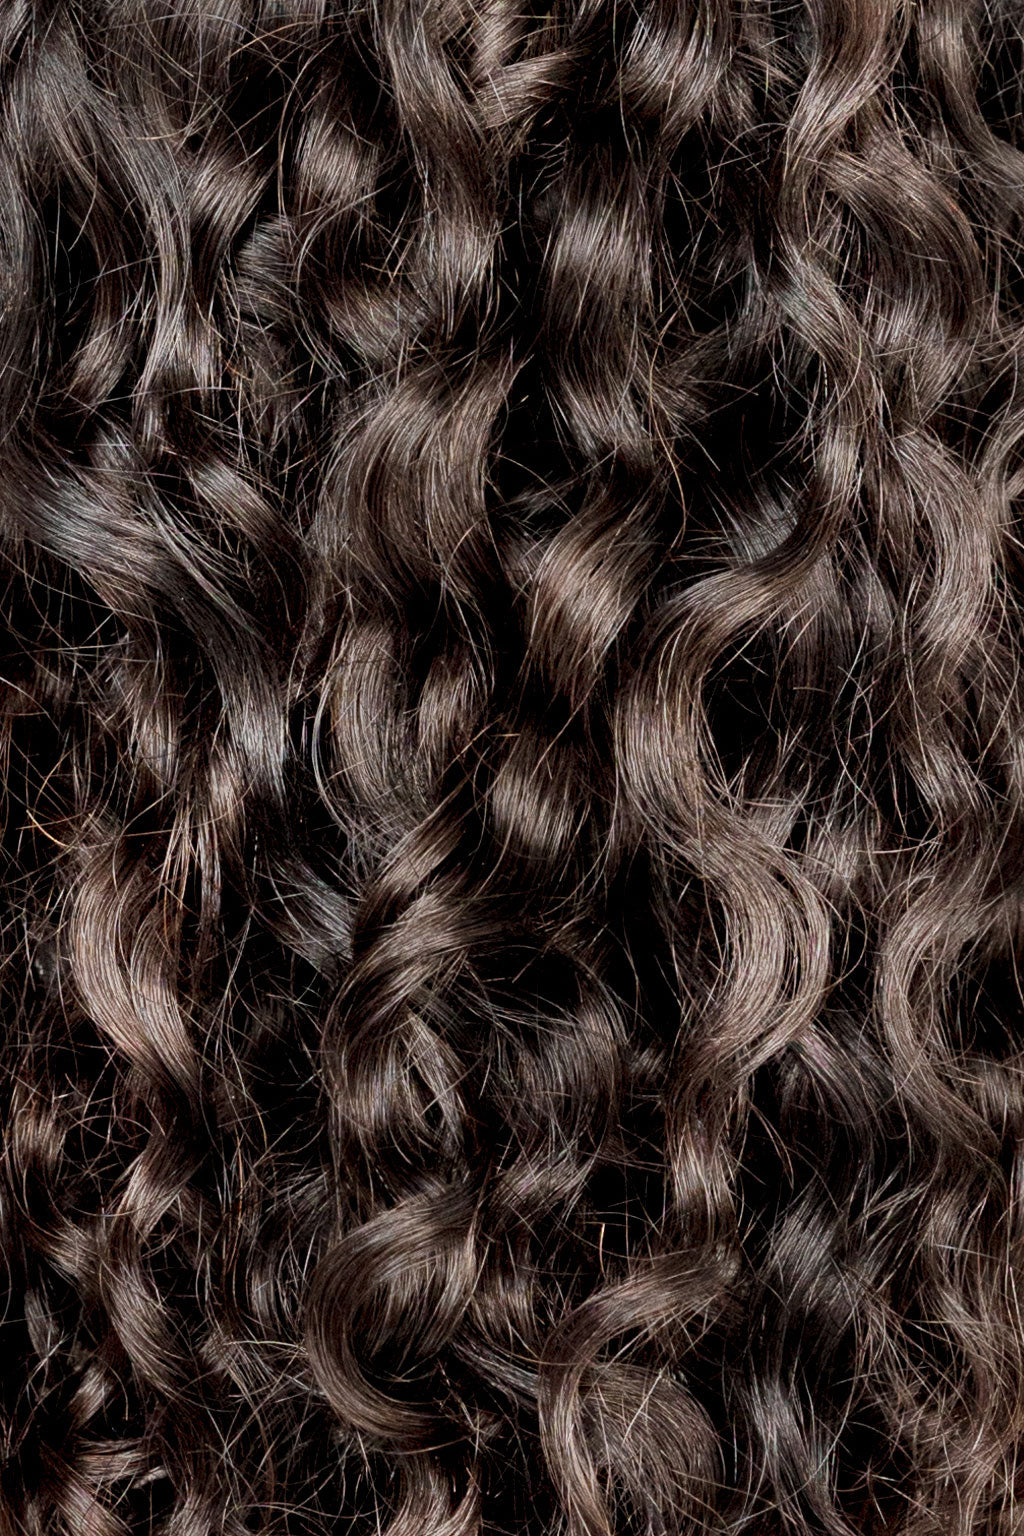 Dark Ash Brown Curly Slip-On Hair Extensions 180G 22”